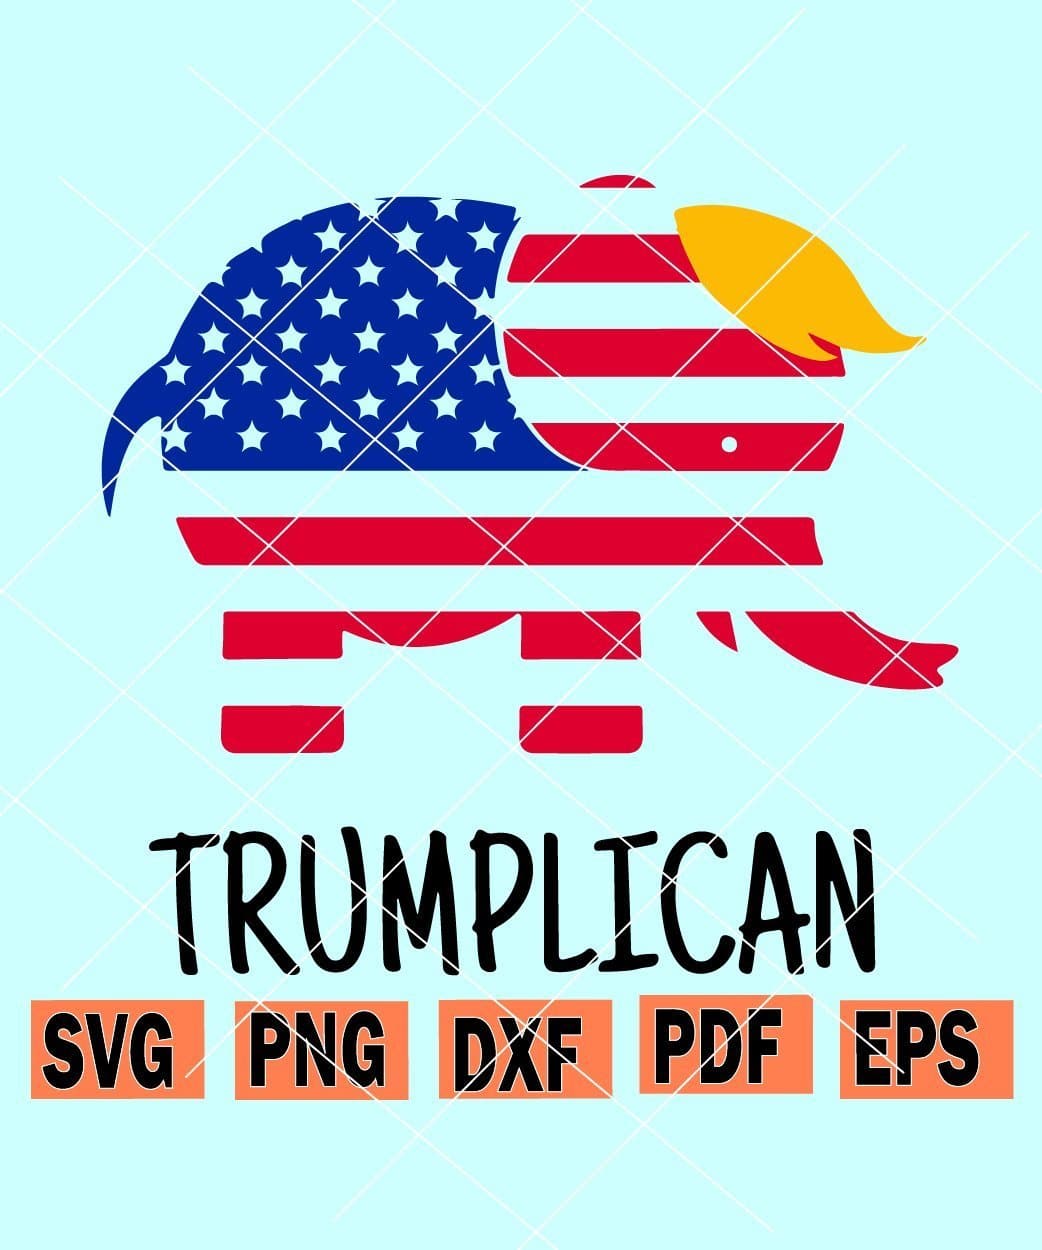 Download 17+ Free Trump 2020 Svg Background Free SVG files ...